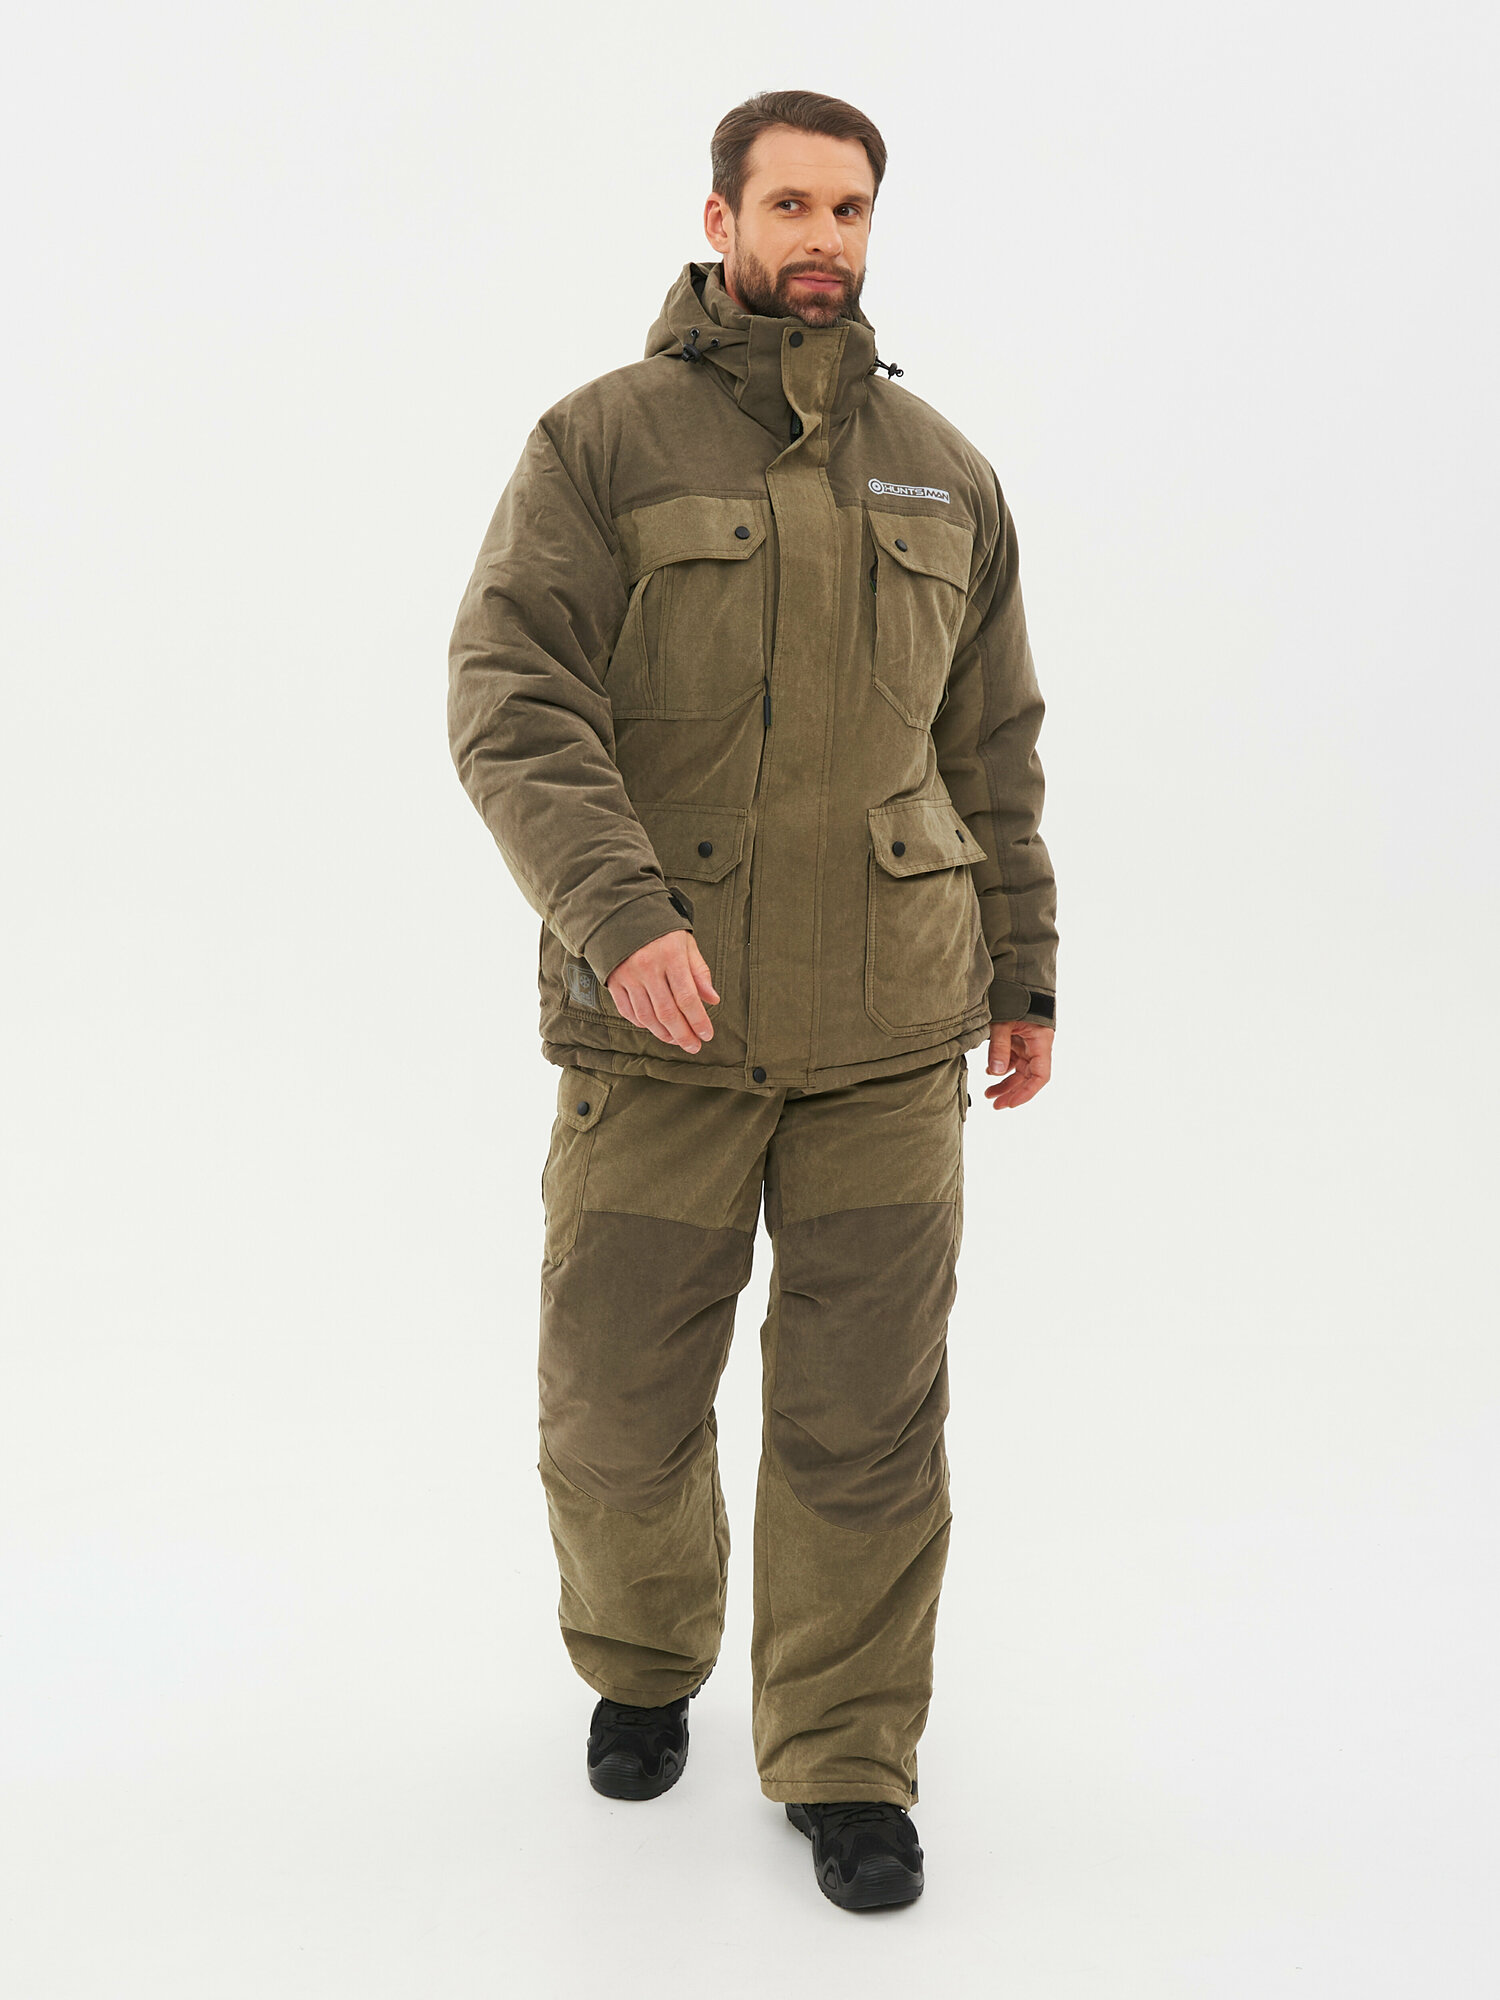 Костюм зимний Huntsman "Канада", размер 48-50, рост 170-176 см, ткань Finlandia, цвет хаки